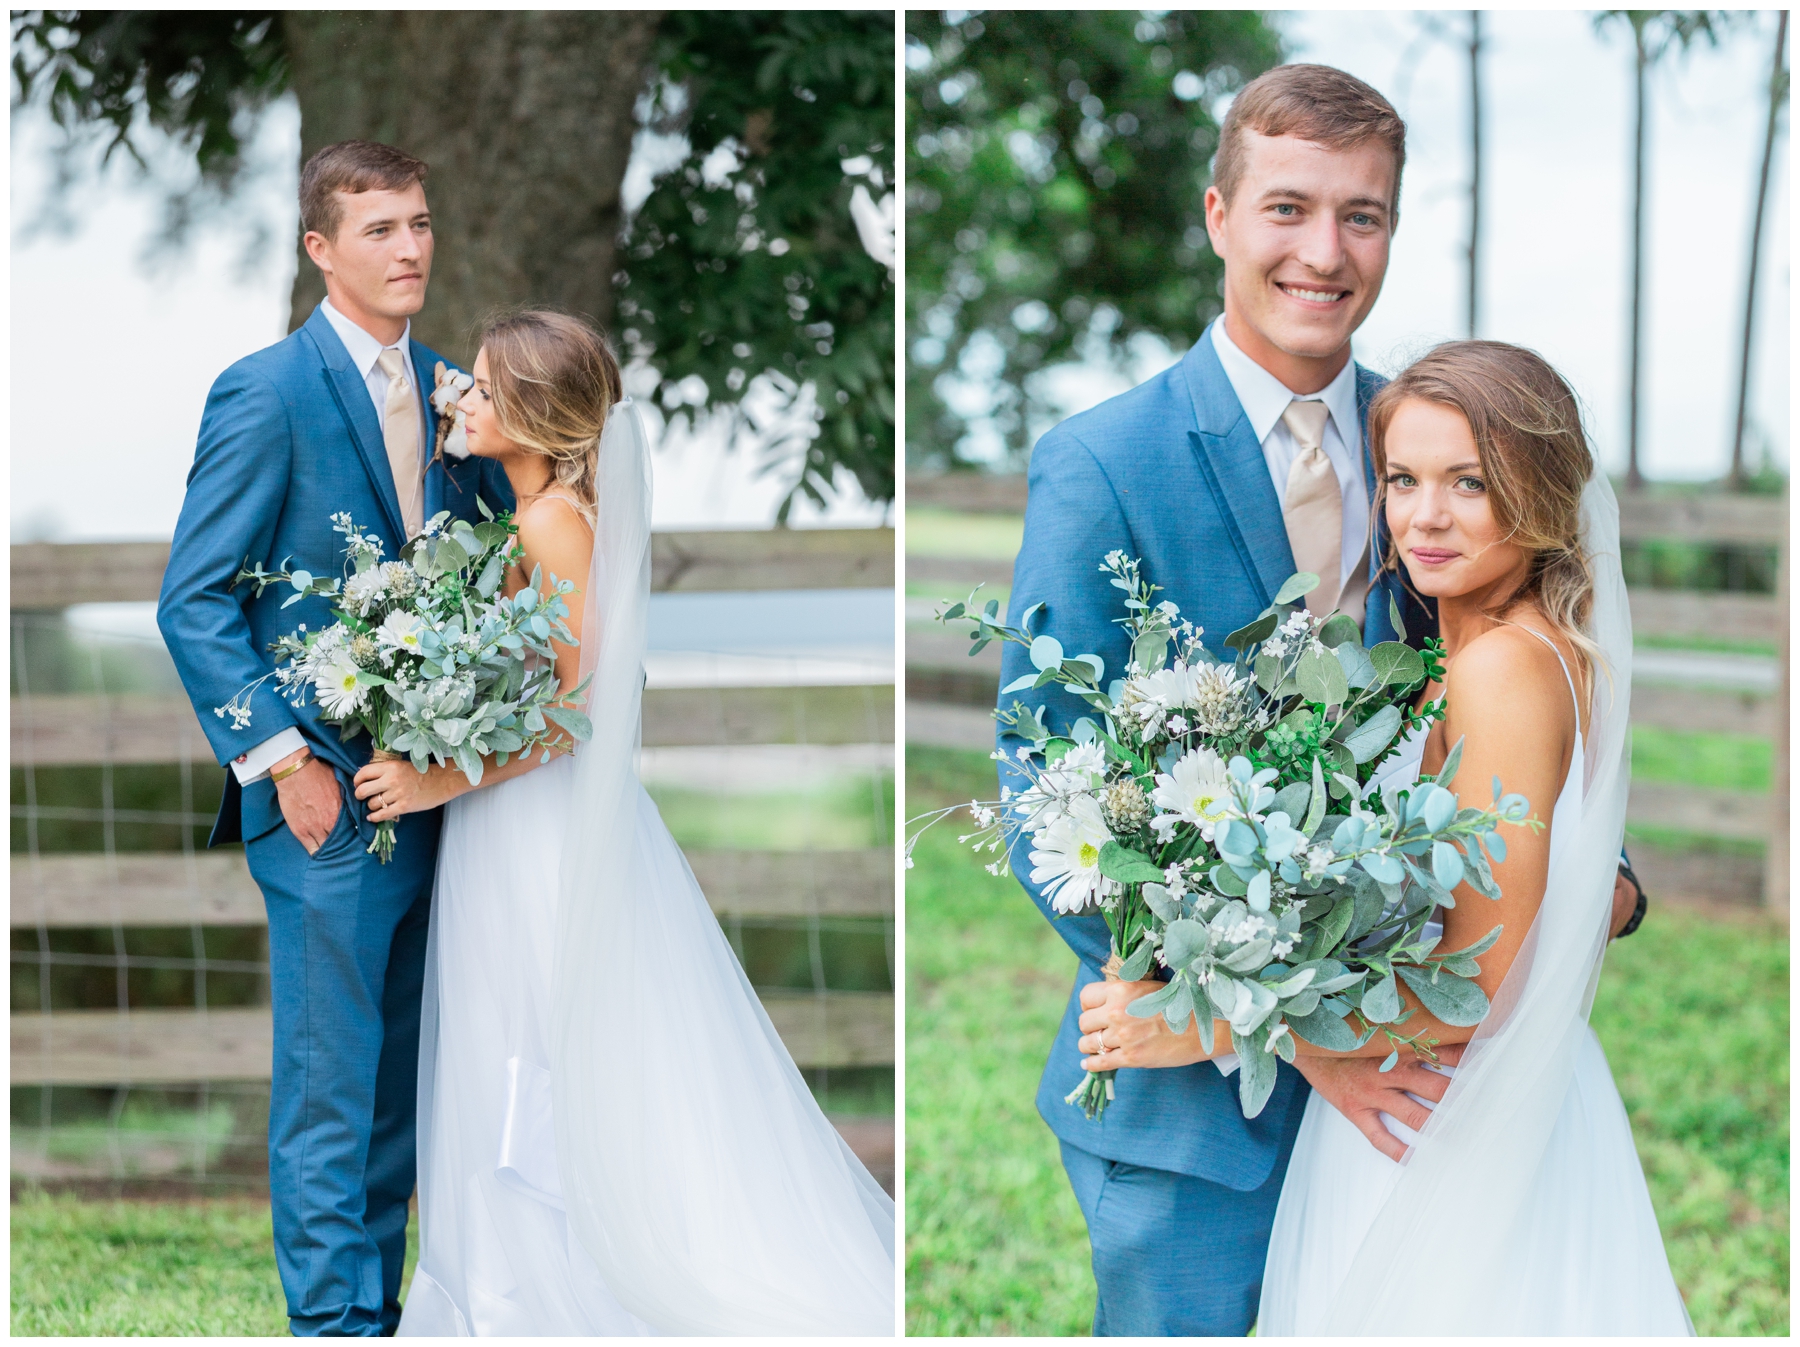 Atlanta_Georgia_Wedding_Photographer_Engaged_Outdoor Ceremony_Portraits_Bridal_Groom_Rustic Wedding